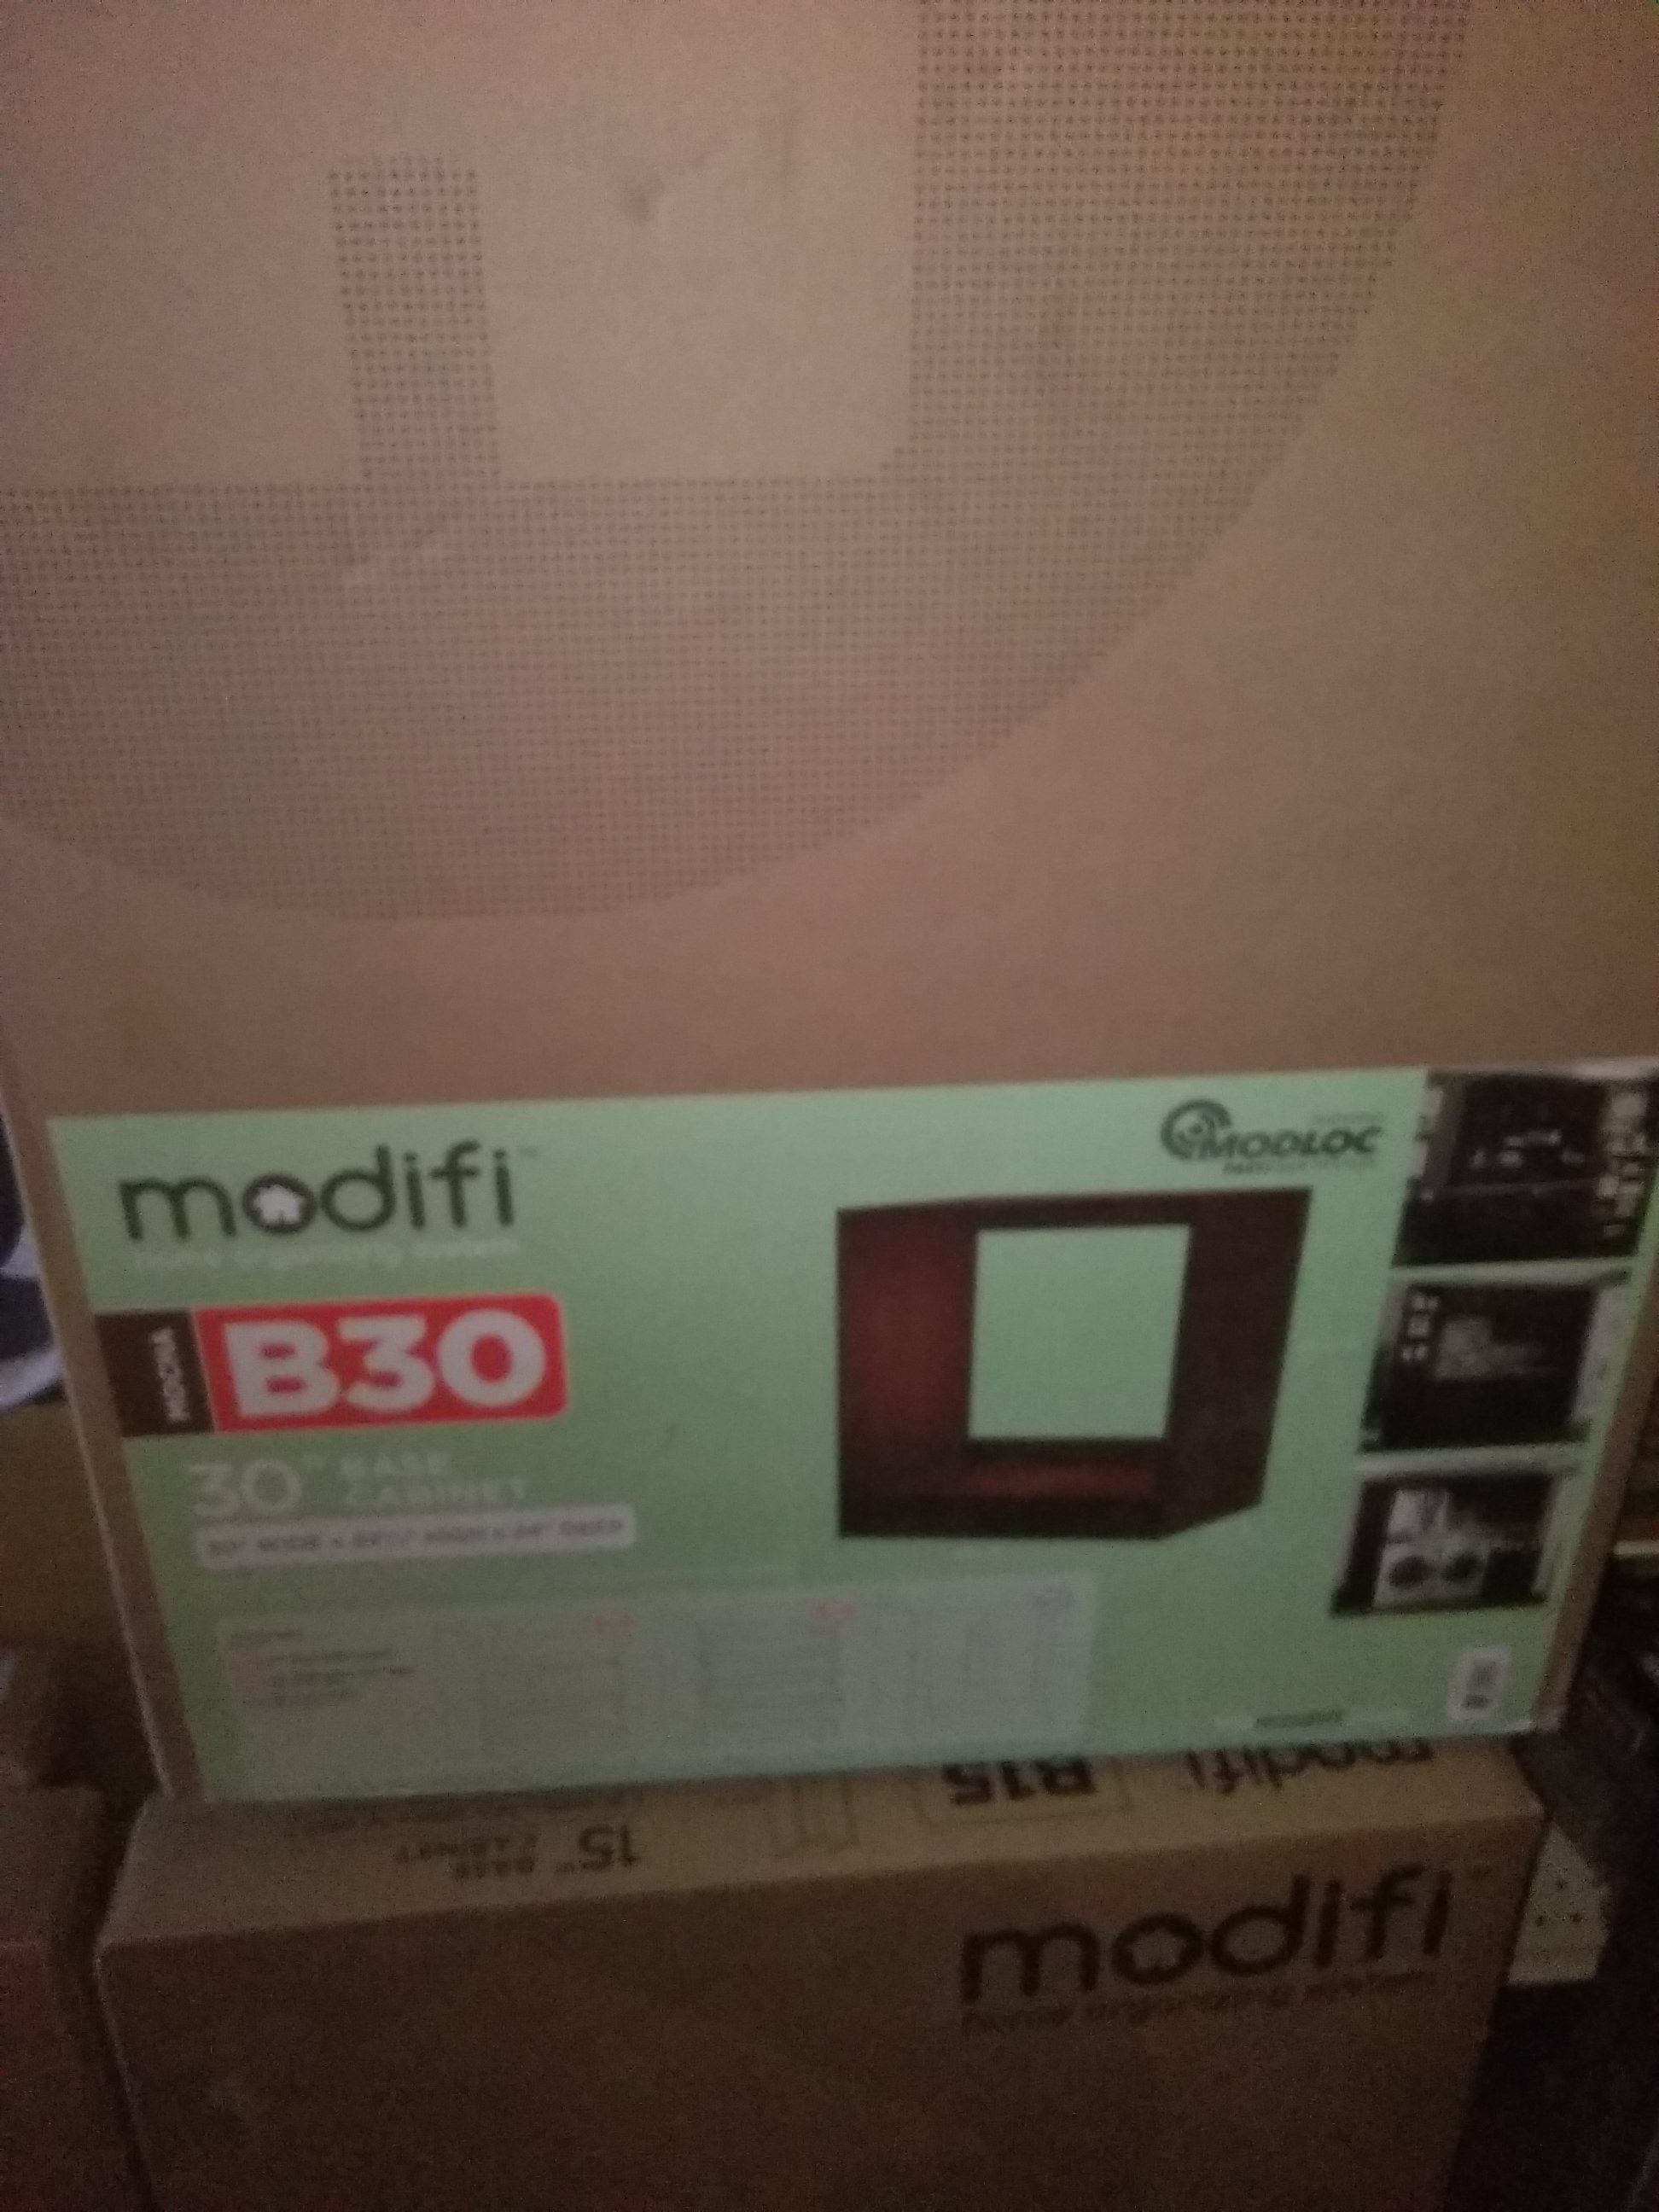 Modifi 30" Base Cabinet. Chocolate color. 5 available